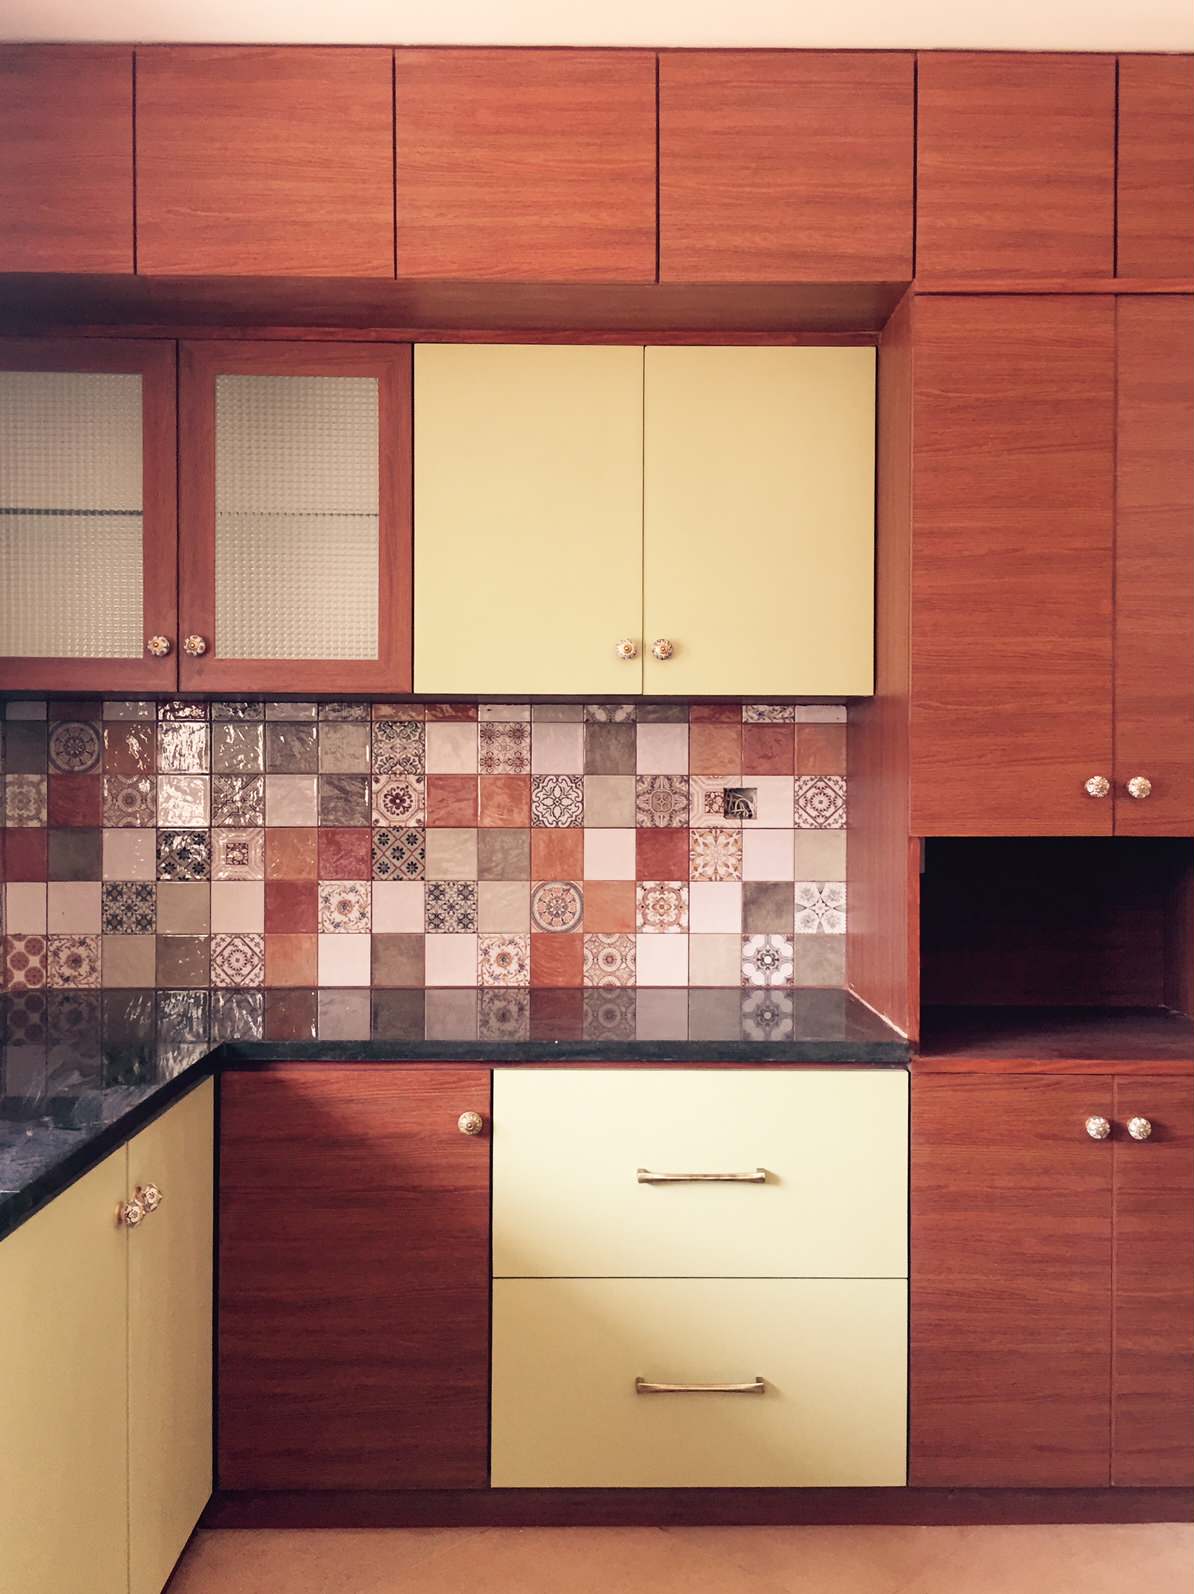 Top 999+ kitchen tiles design images india – Amazing Collection kitchen tiles design images india Full 4K